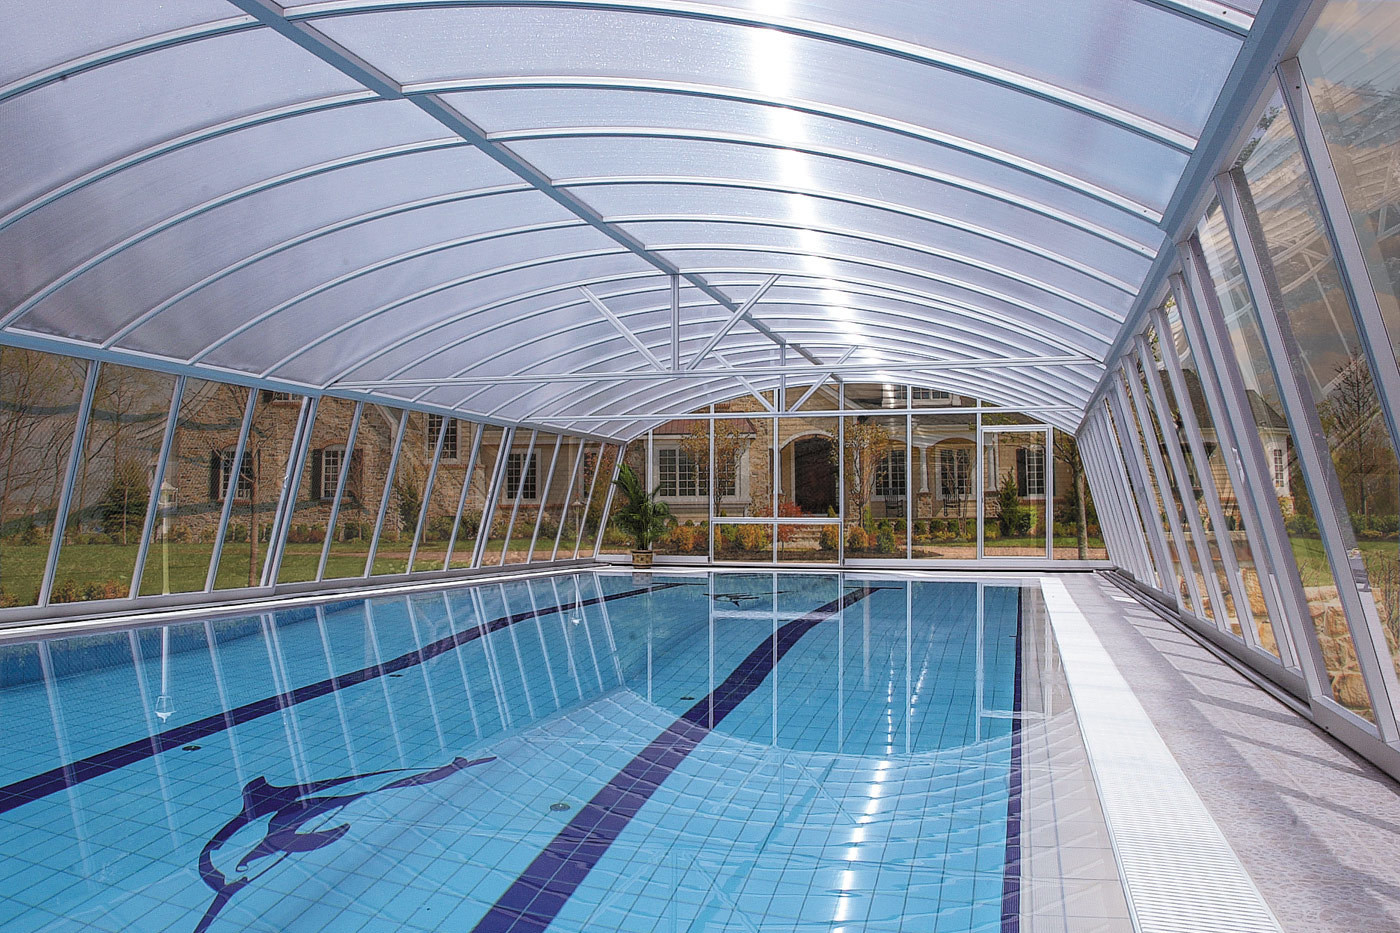 Abris piscine Aquacomet camping - Professional - La Fermeture Parisienne - Yvelines et Hauts-de-Seine - Orgeval